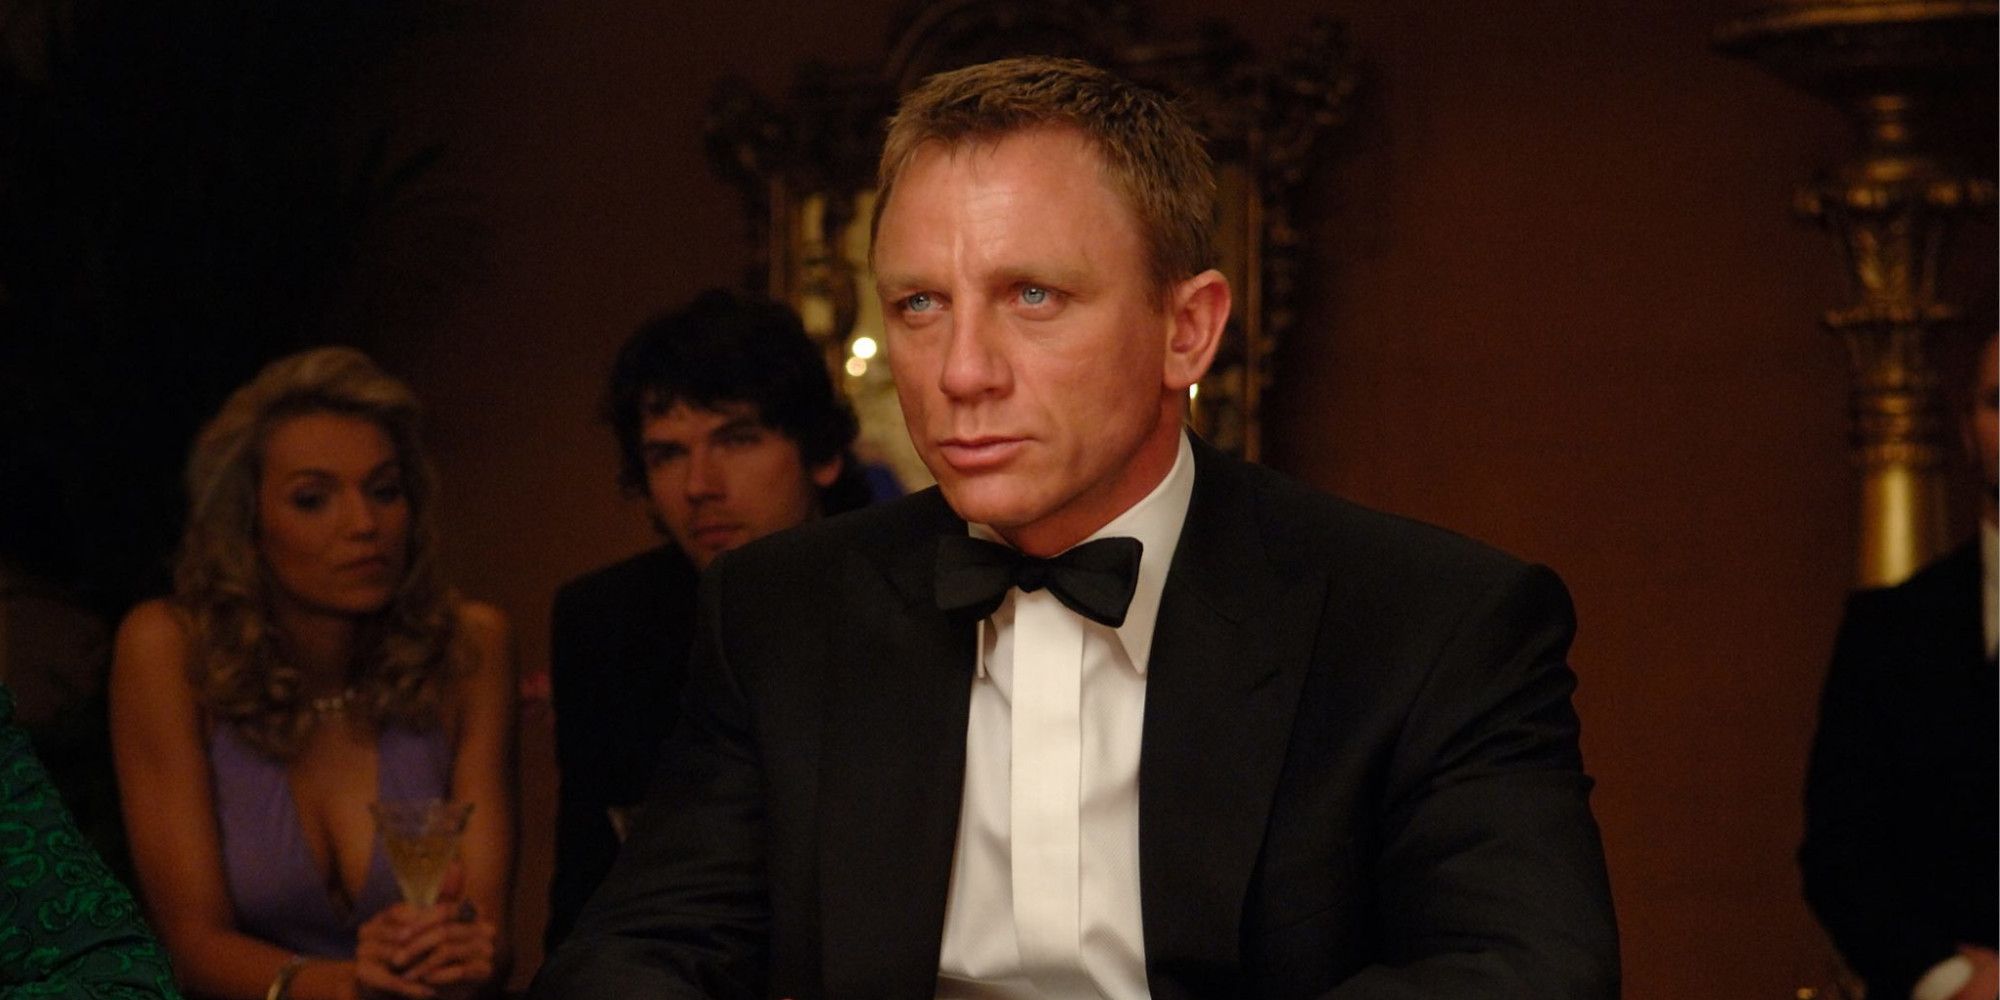 James Bond in a tuxedo in Casino Royale